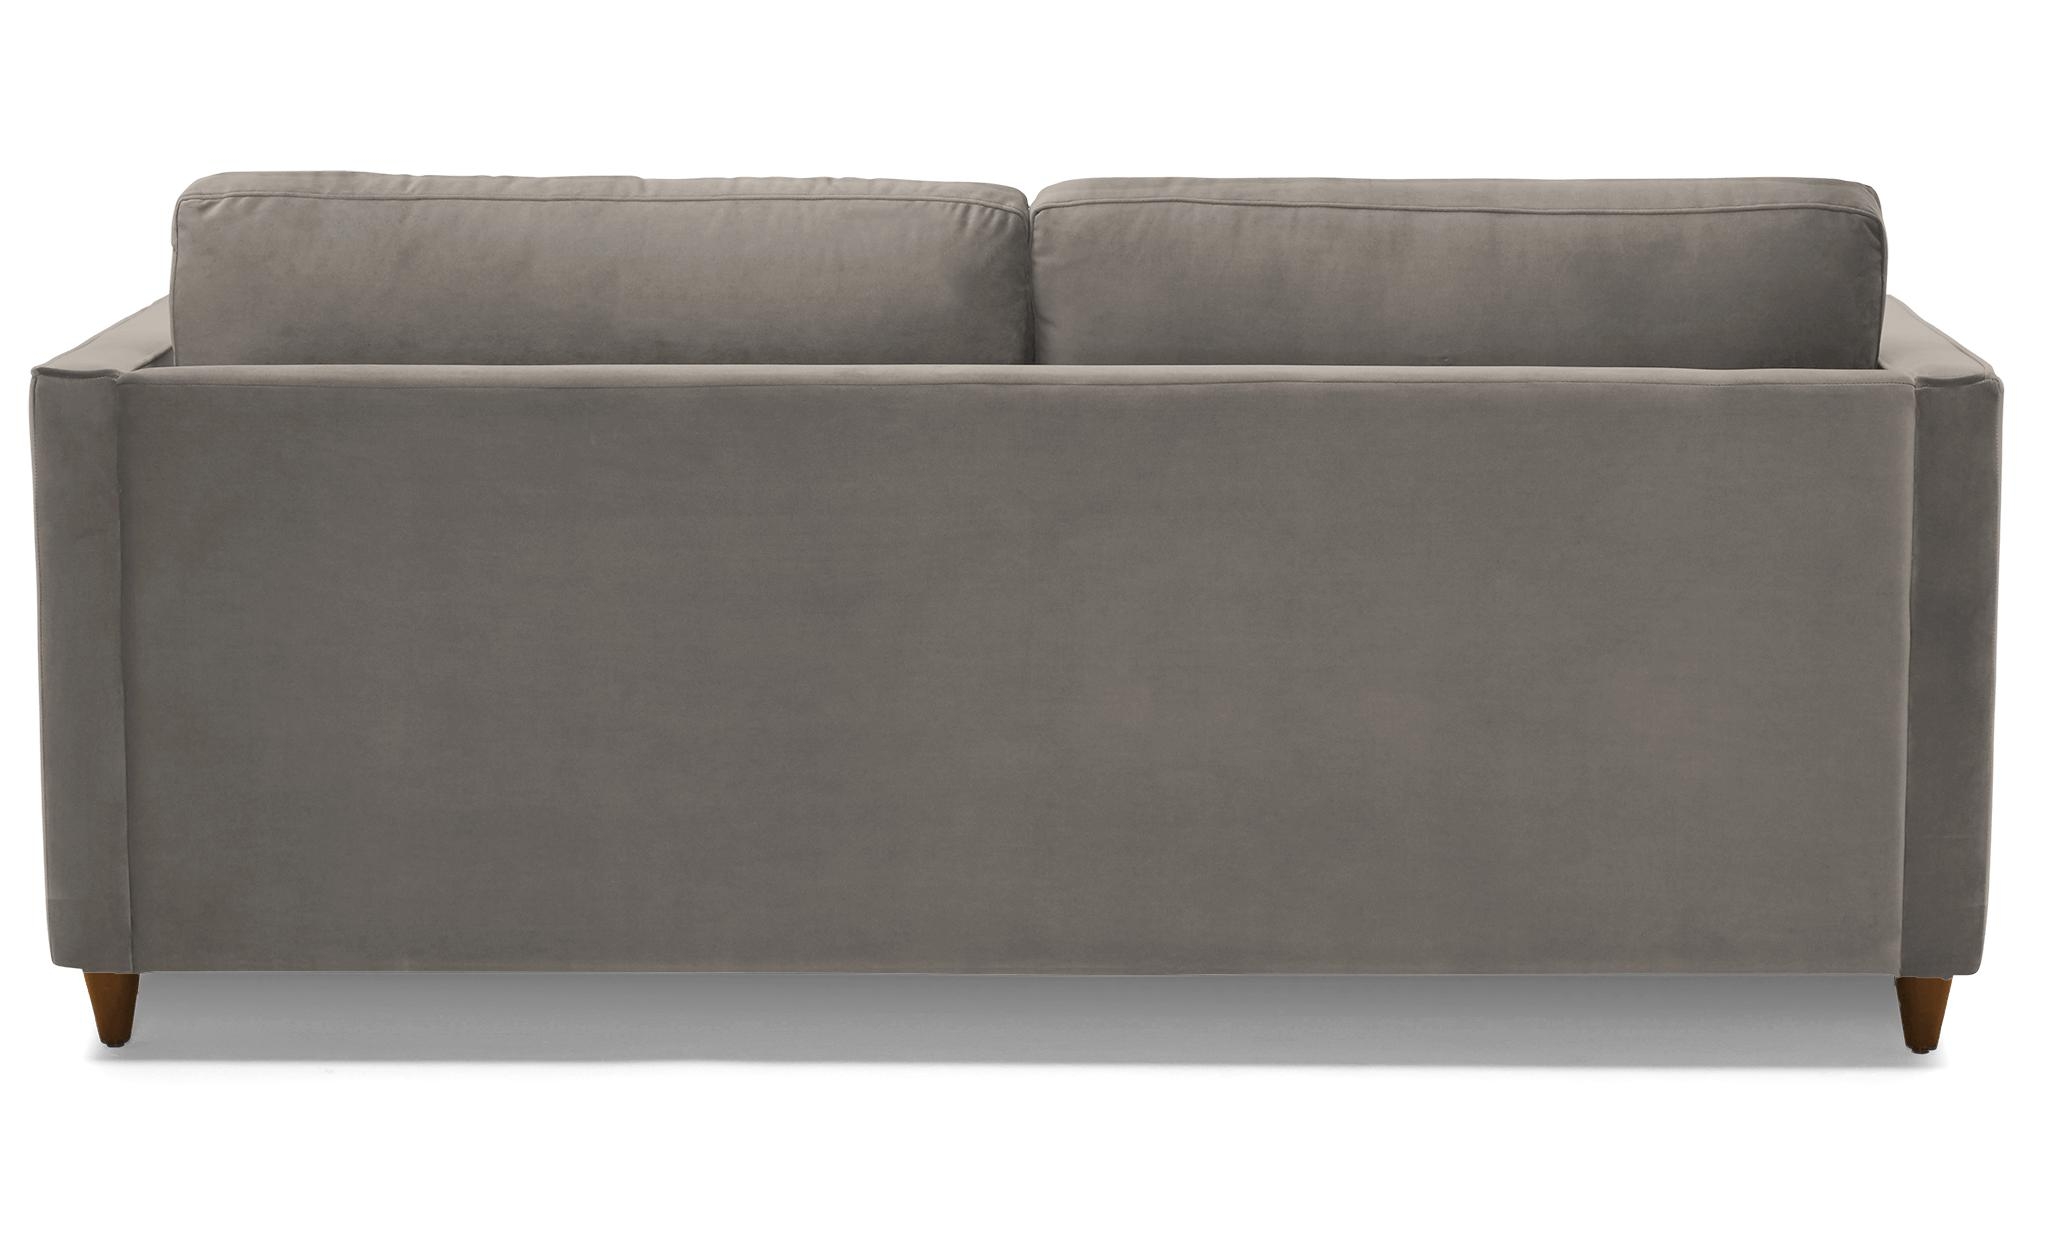 Beige/White Briar Mid Century Modern Sleeper Sofa - Prime Stone - Mocha - Image 4